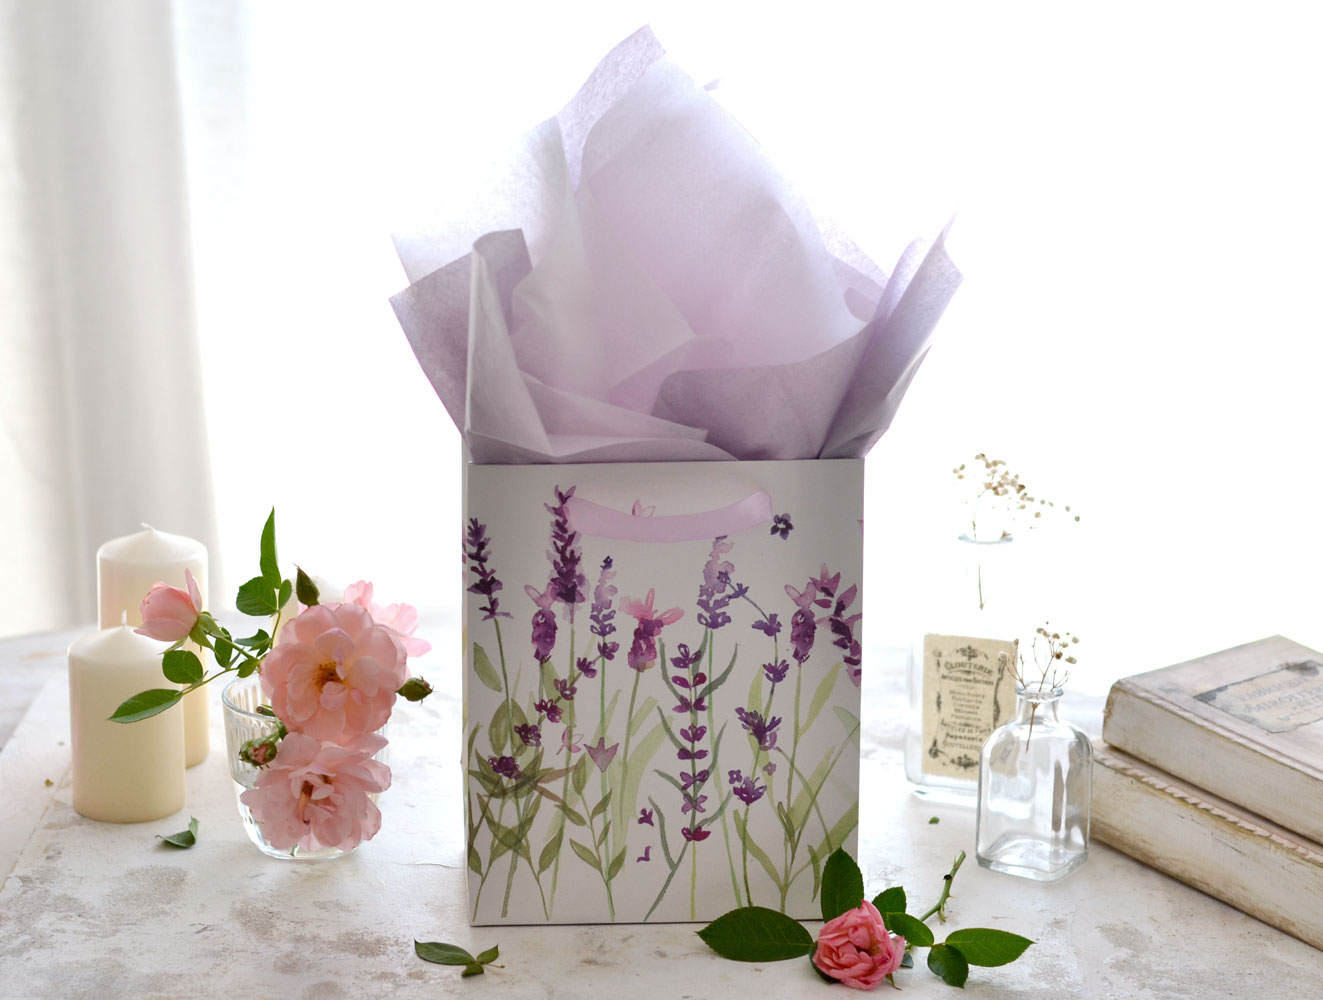 purple tissue with lavender bag